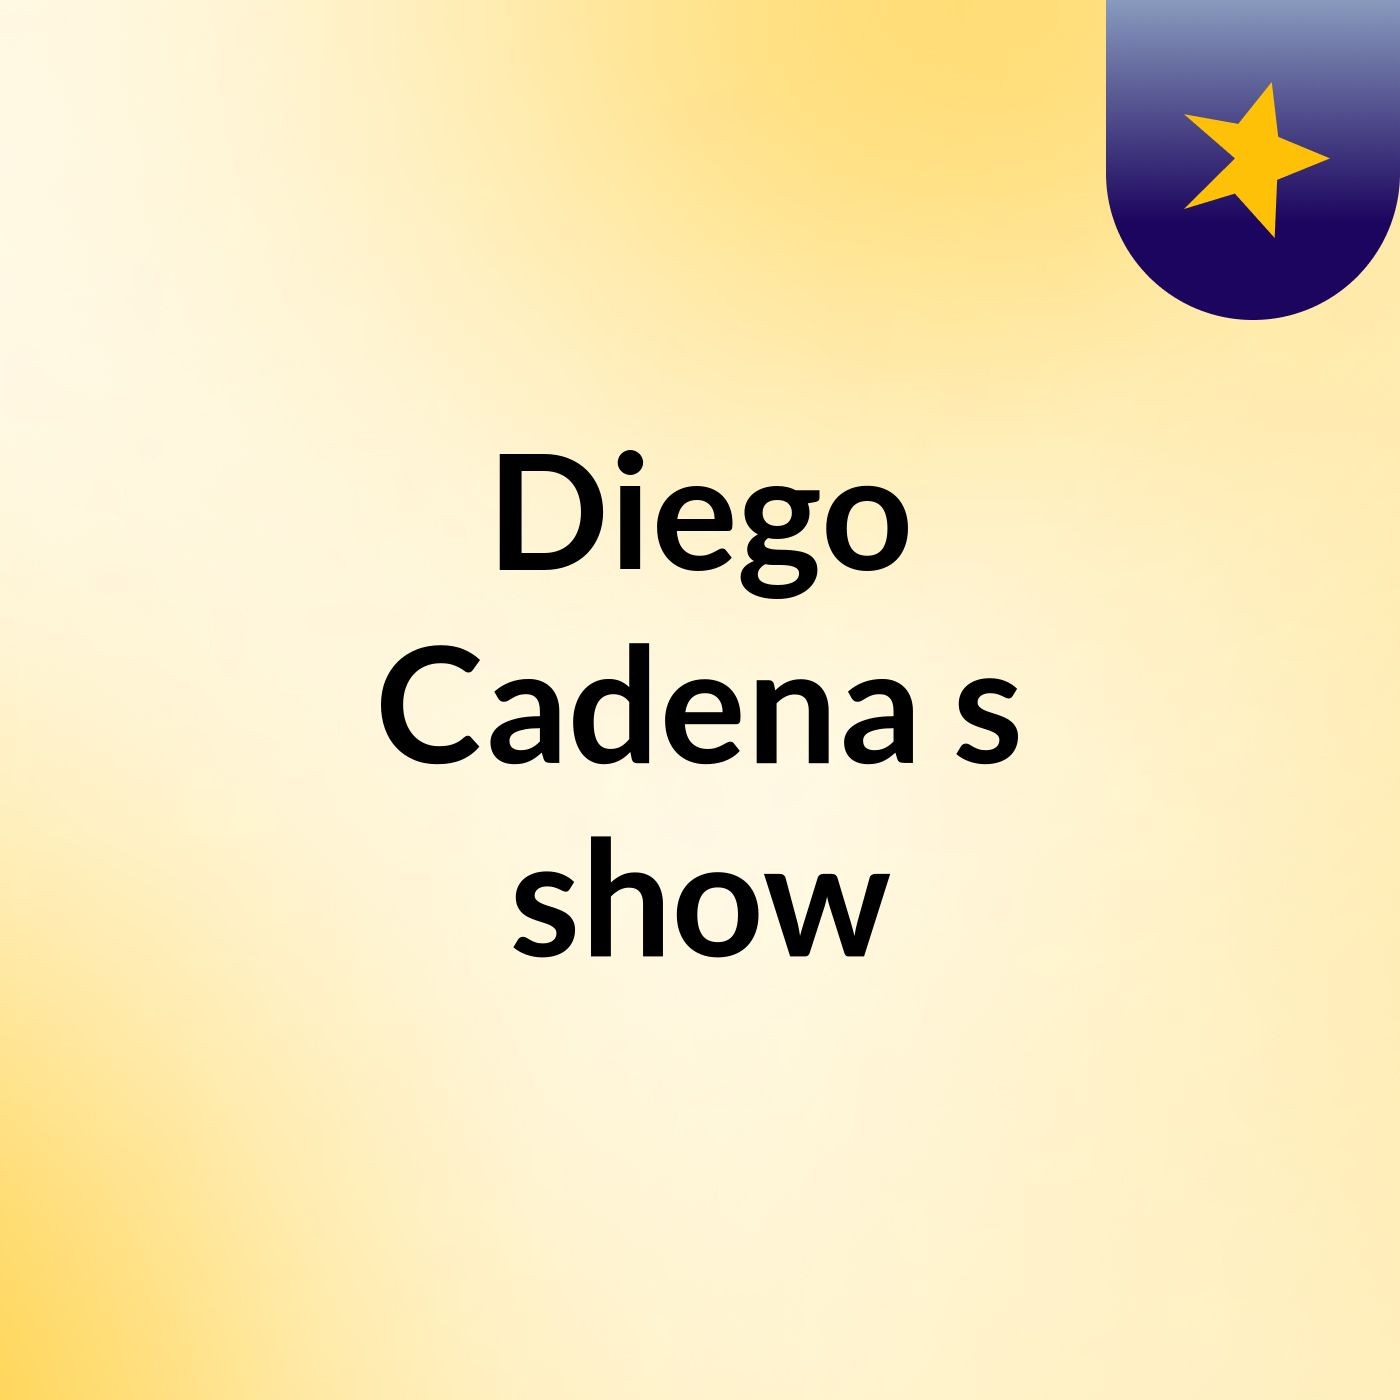 Diego Cadena's show